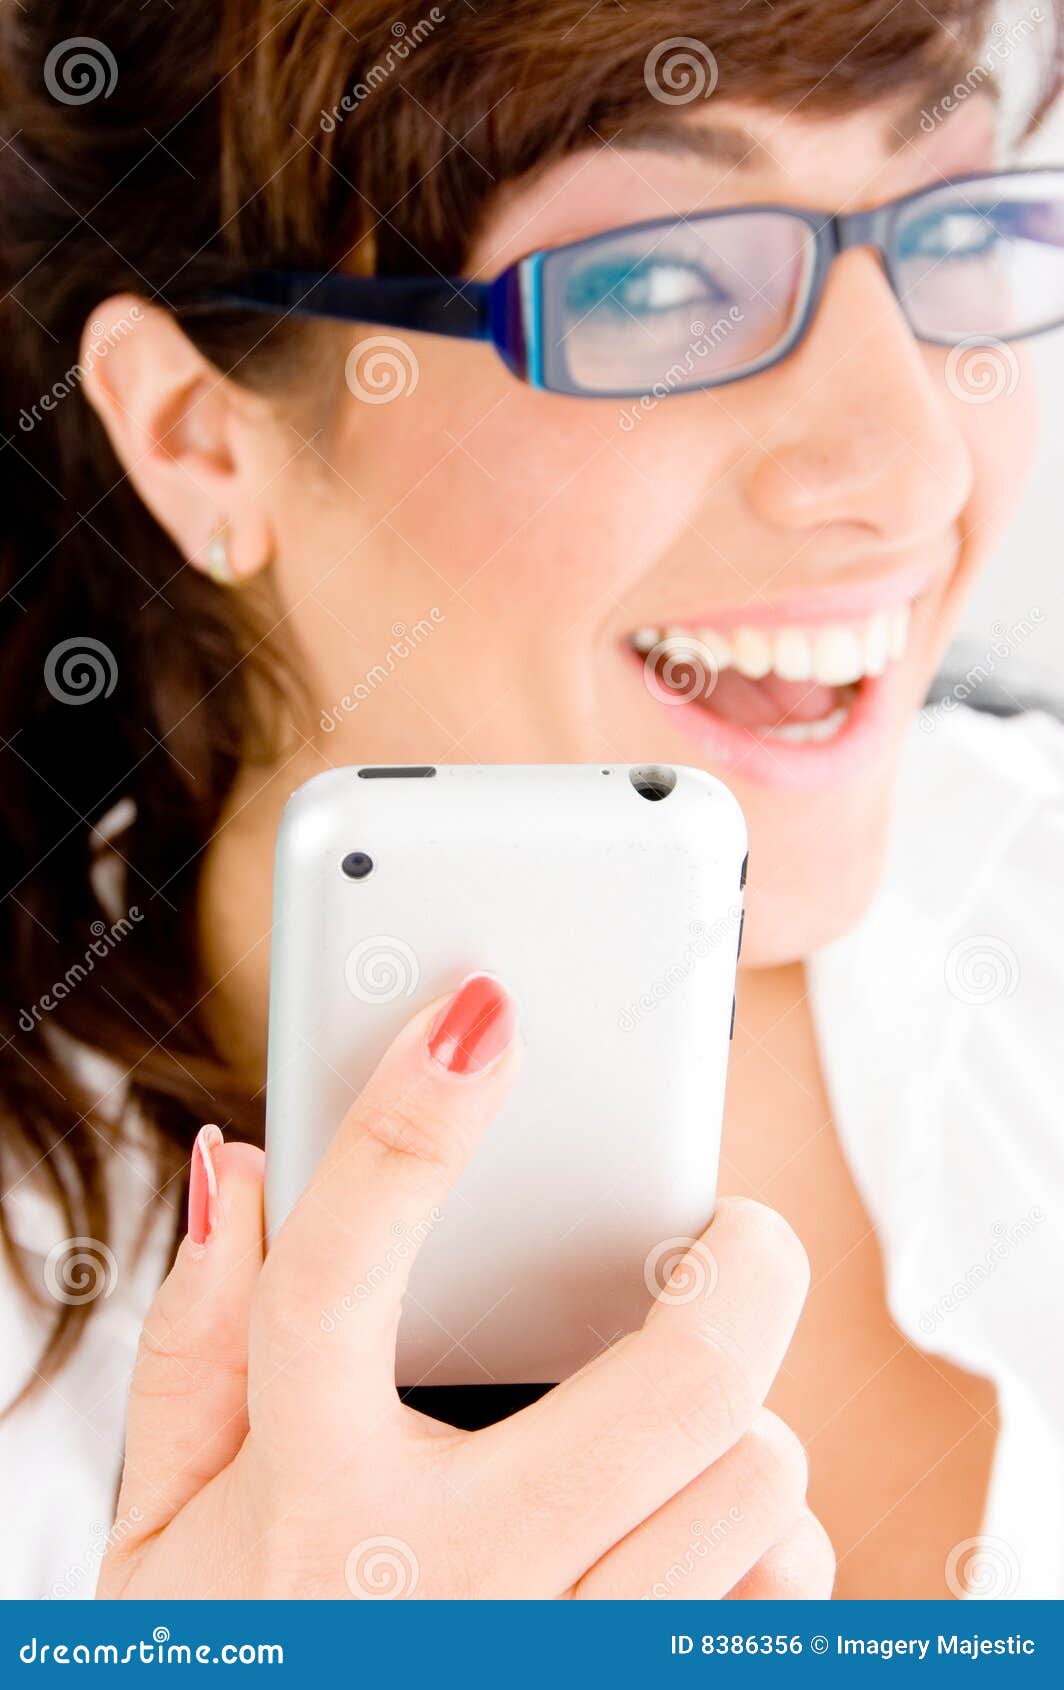 side pose of smiling female holding ipod